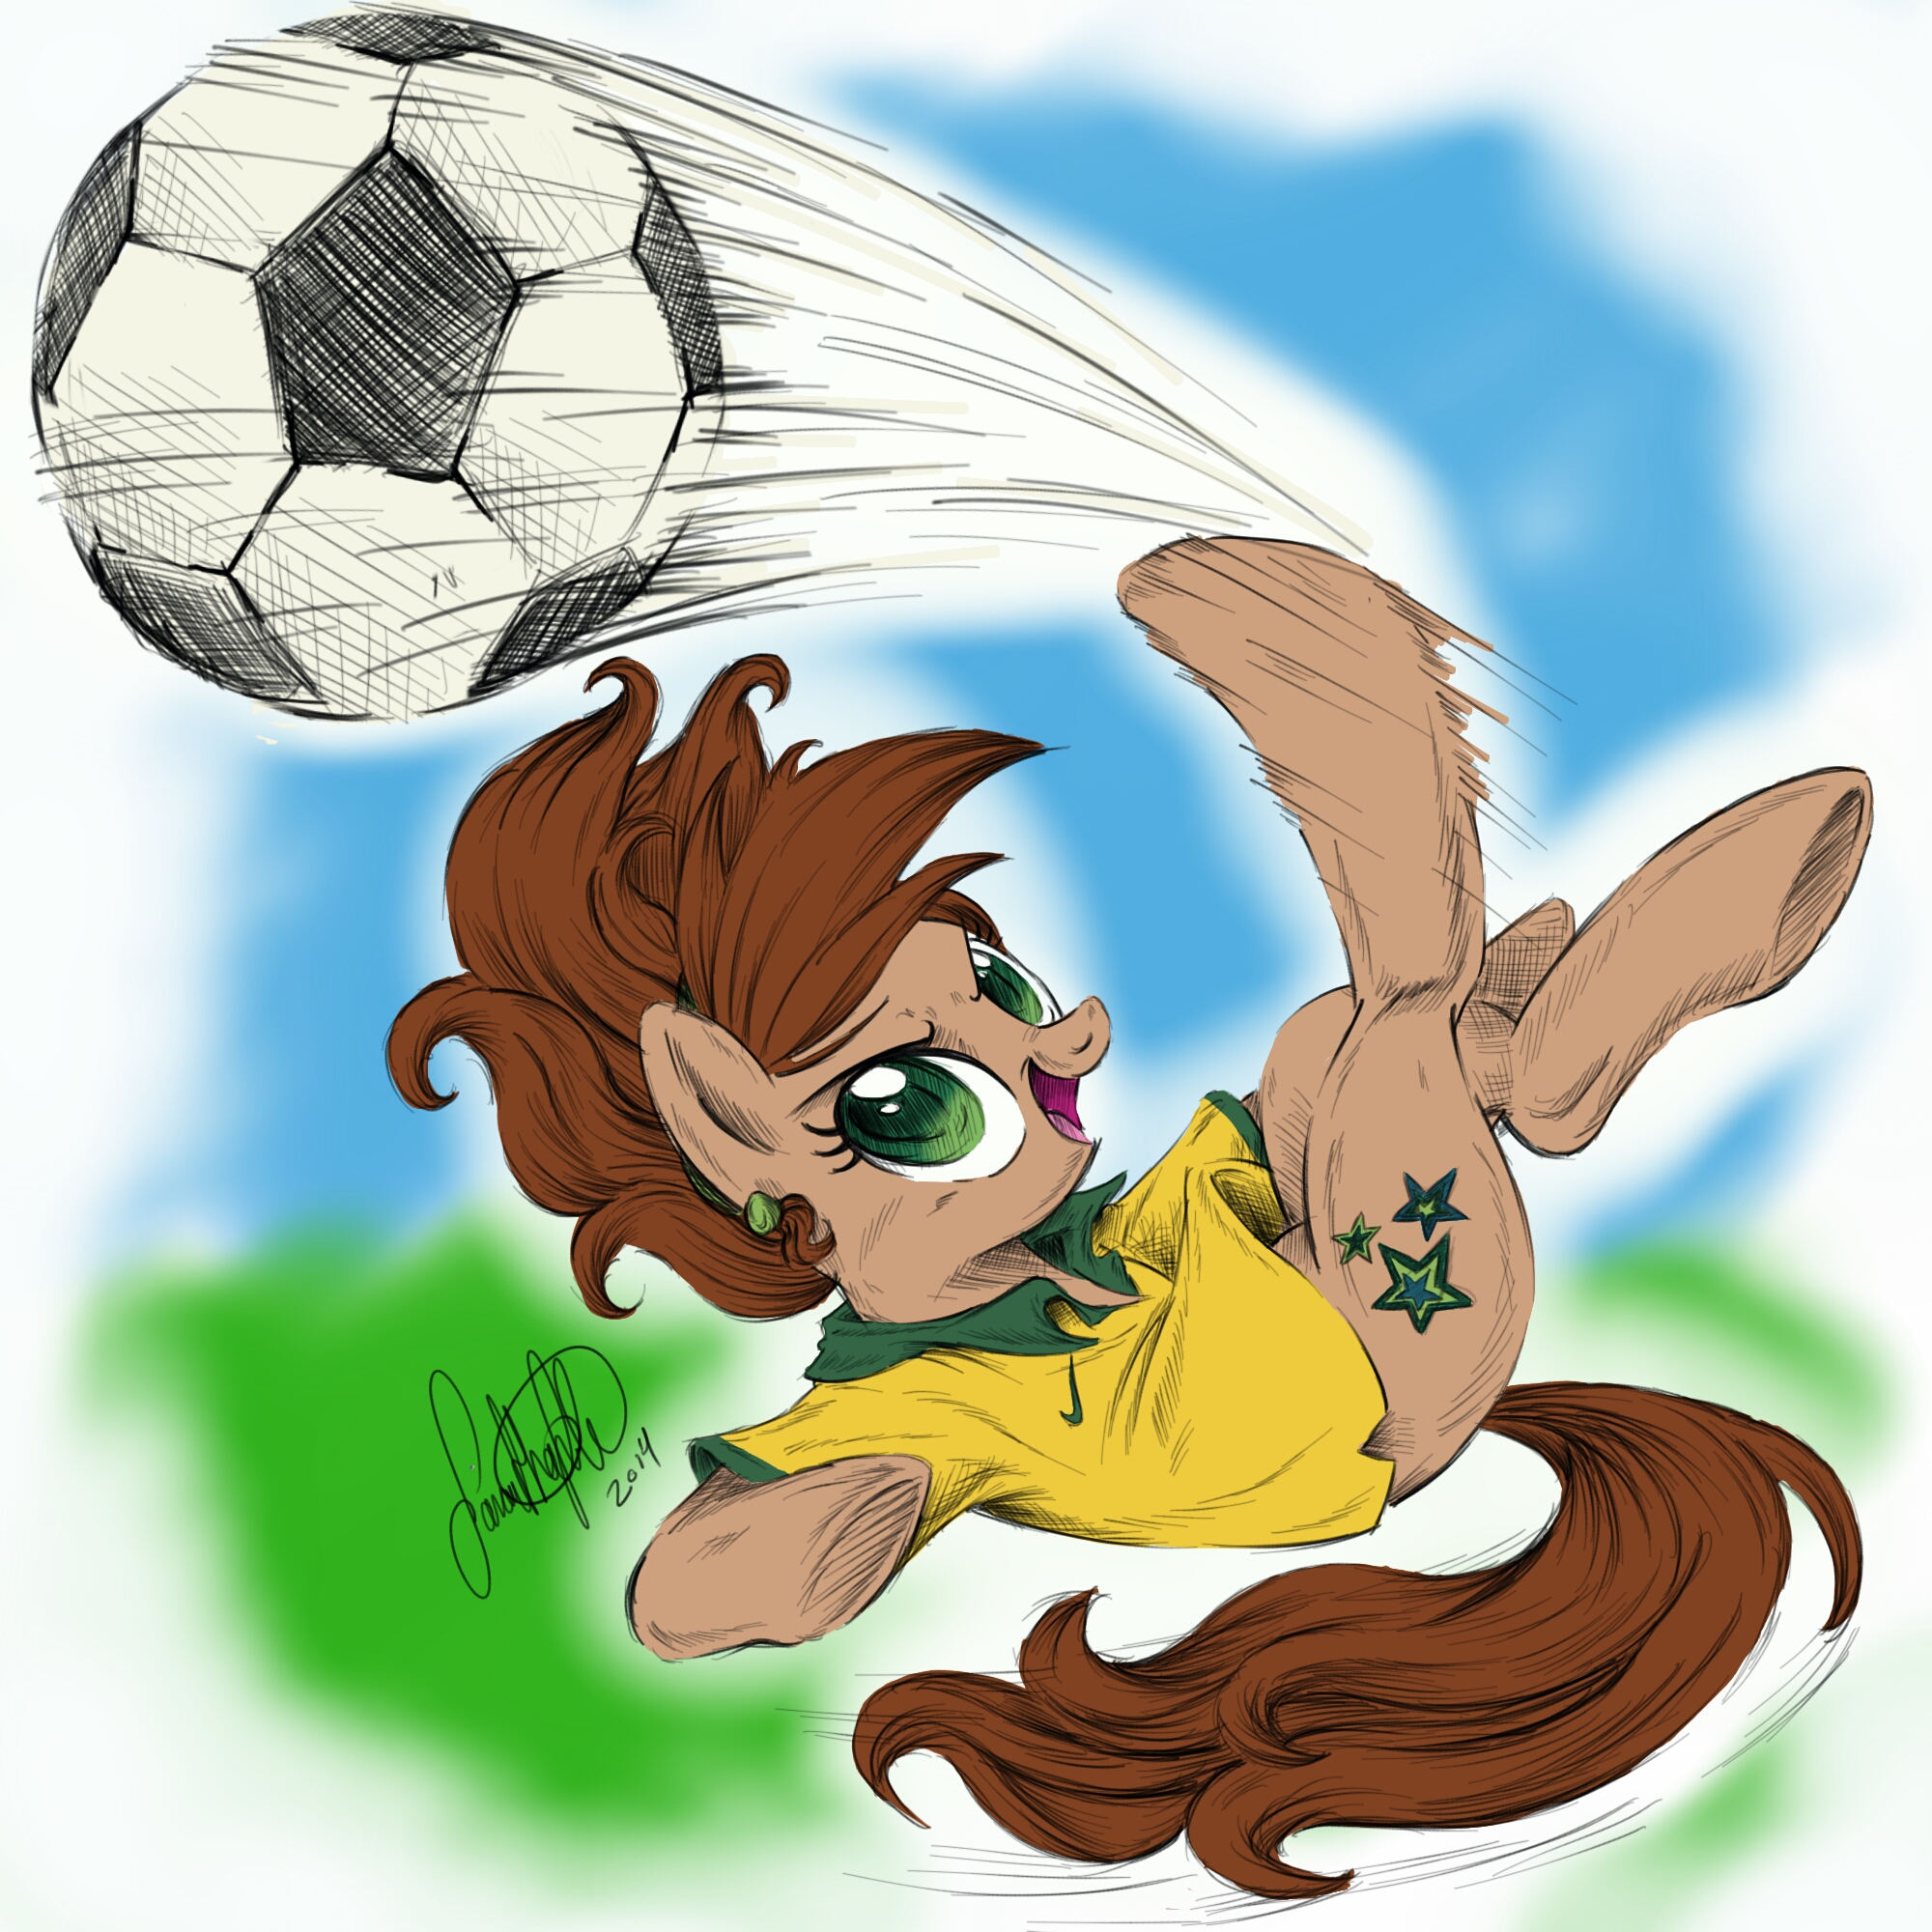 Go Brazil! by JaDeDJynX on DeviantArt